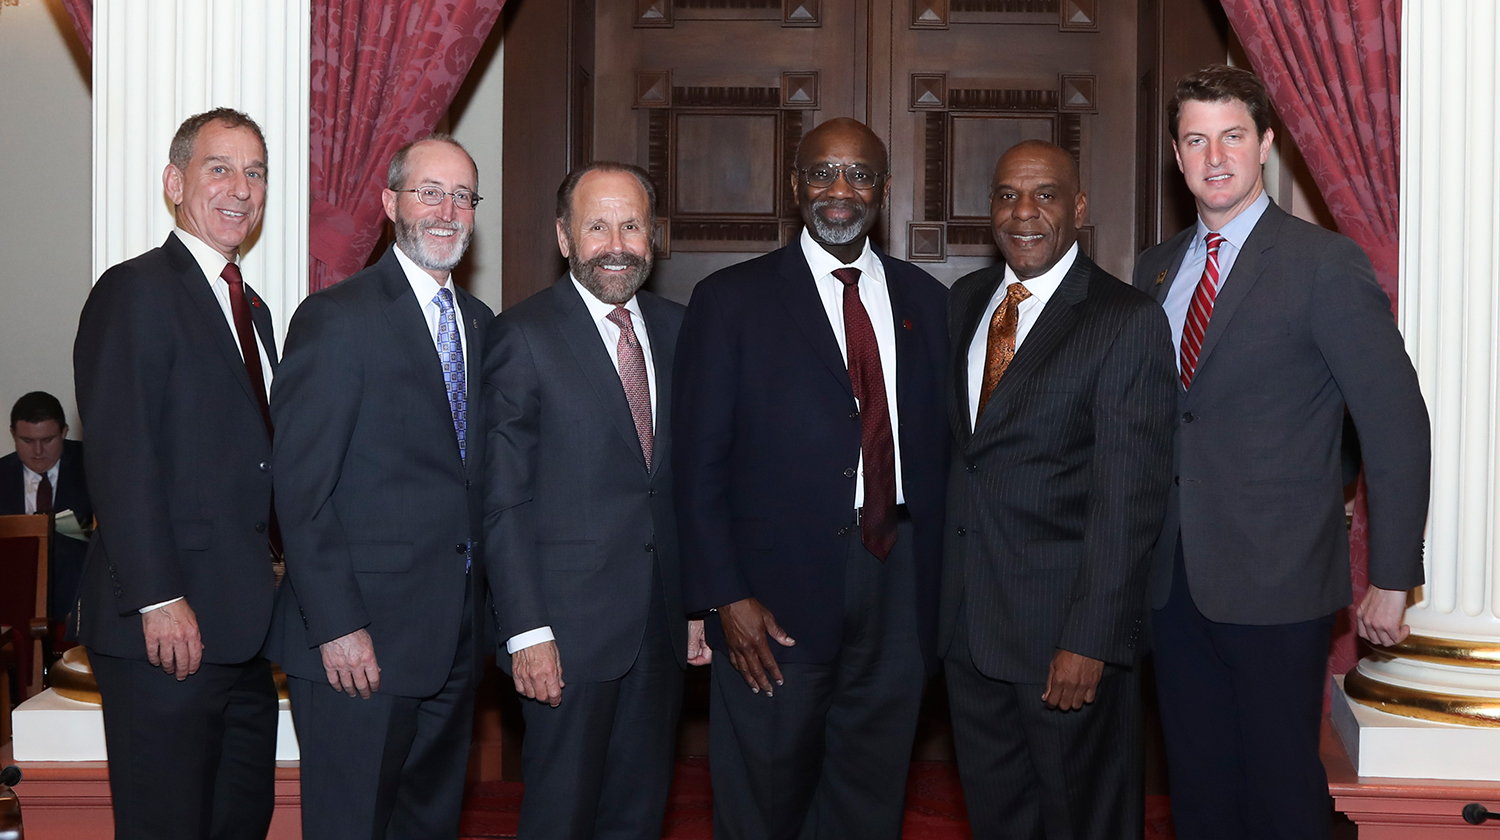 CSUDH President Willie J. Hagan poses with members of the California State Senate. Left to Right: Bob Wieckowski; Steve Glazer; Jerry Hill; Willie J. Hagan; Steve Bradford; and Henry Stern.